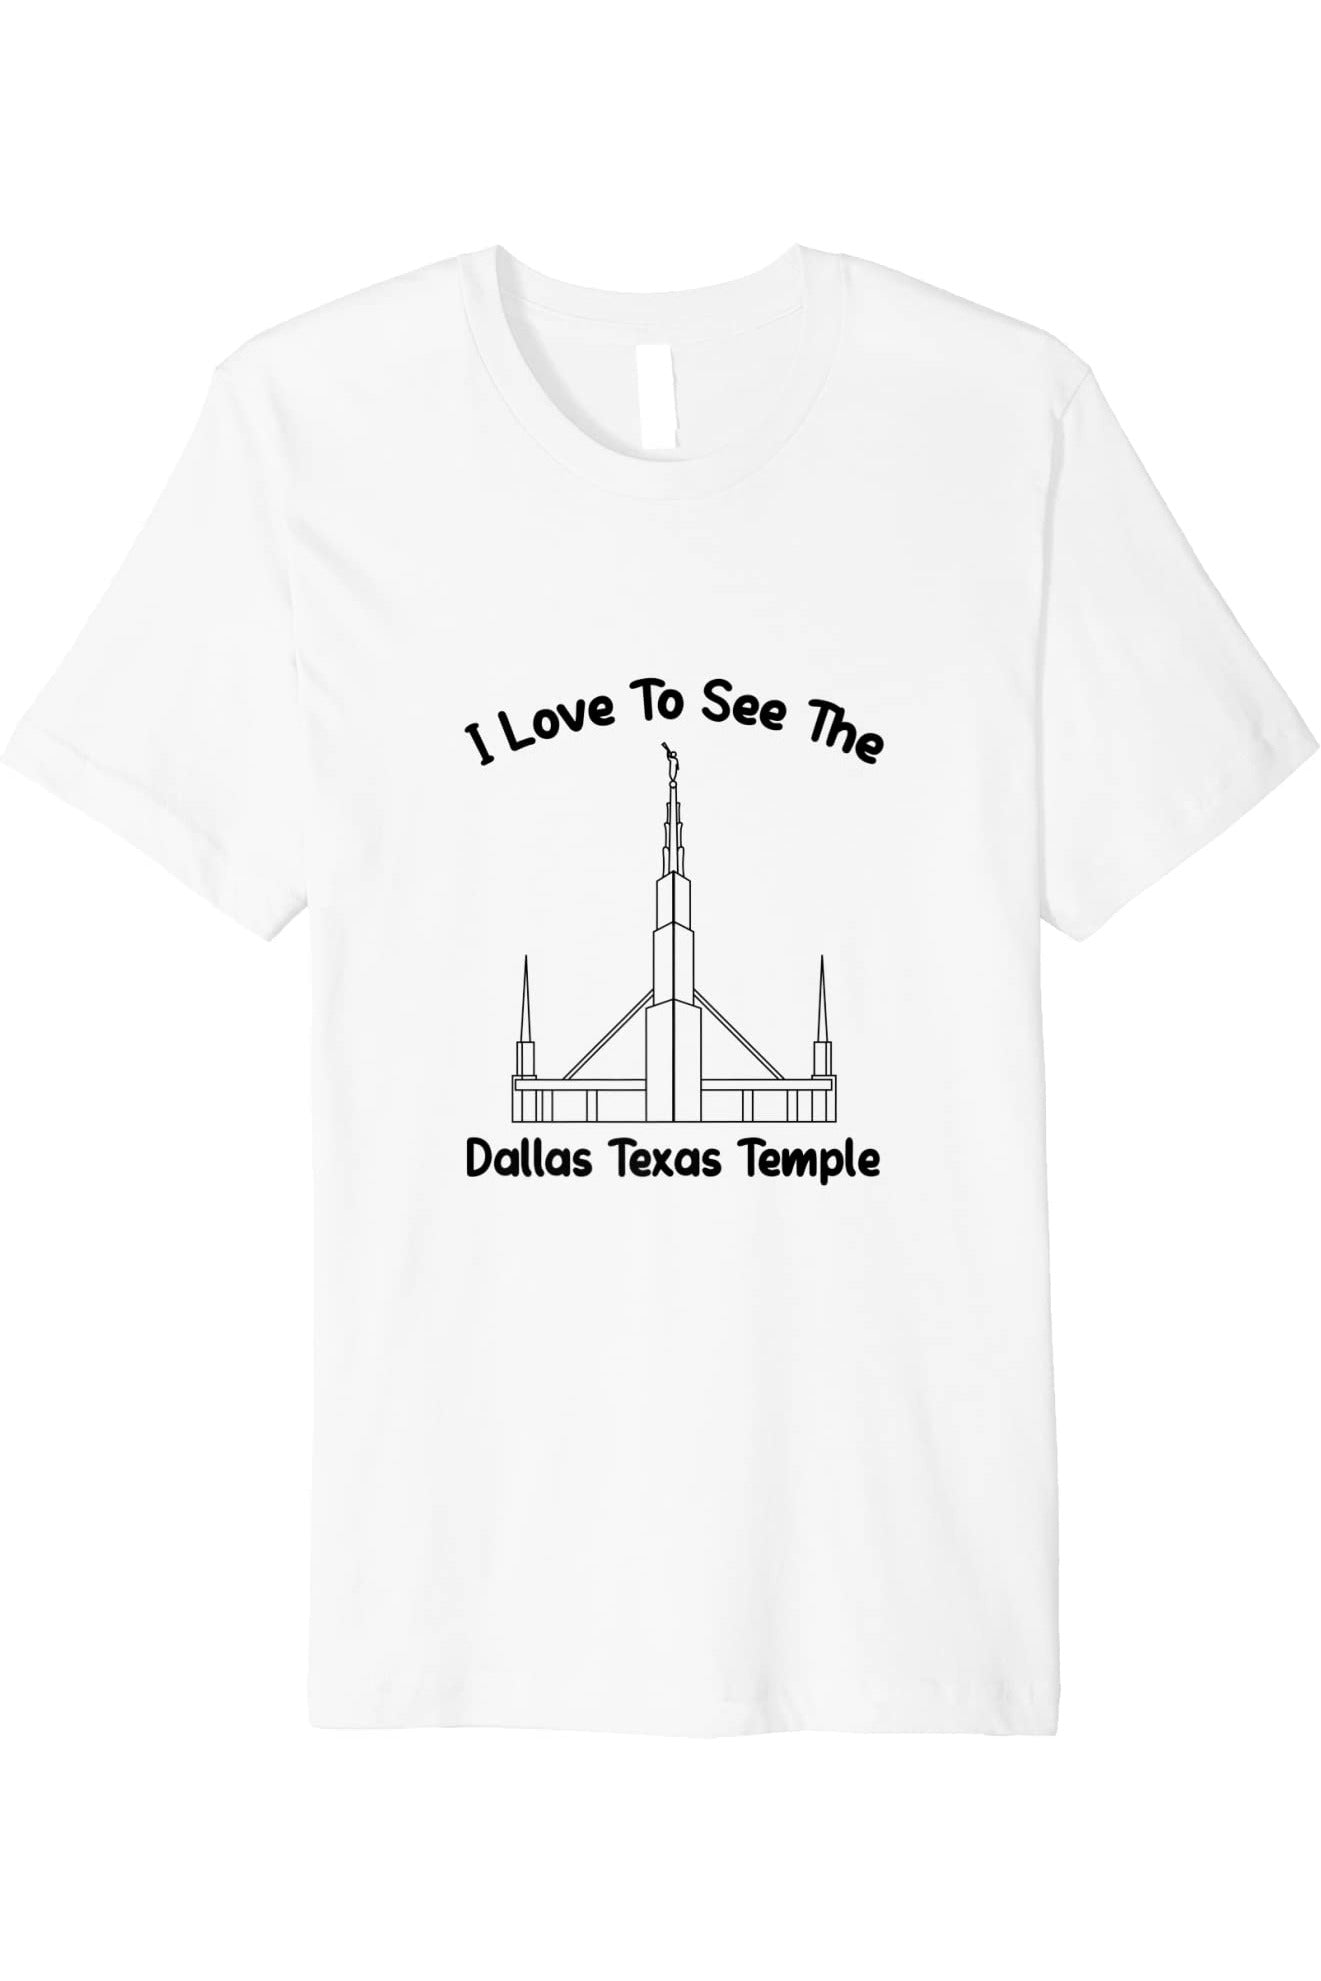 Dallas Texas Temple T-Shirt - Premium - Primary Style (English) US